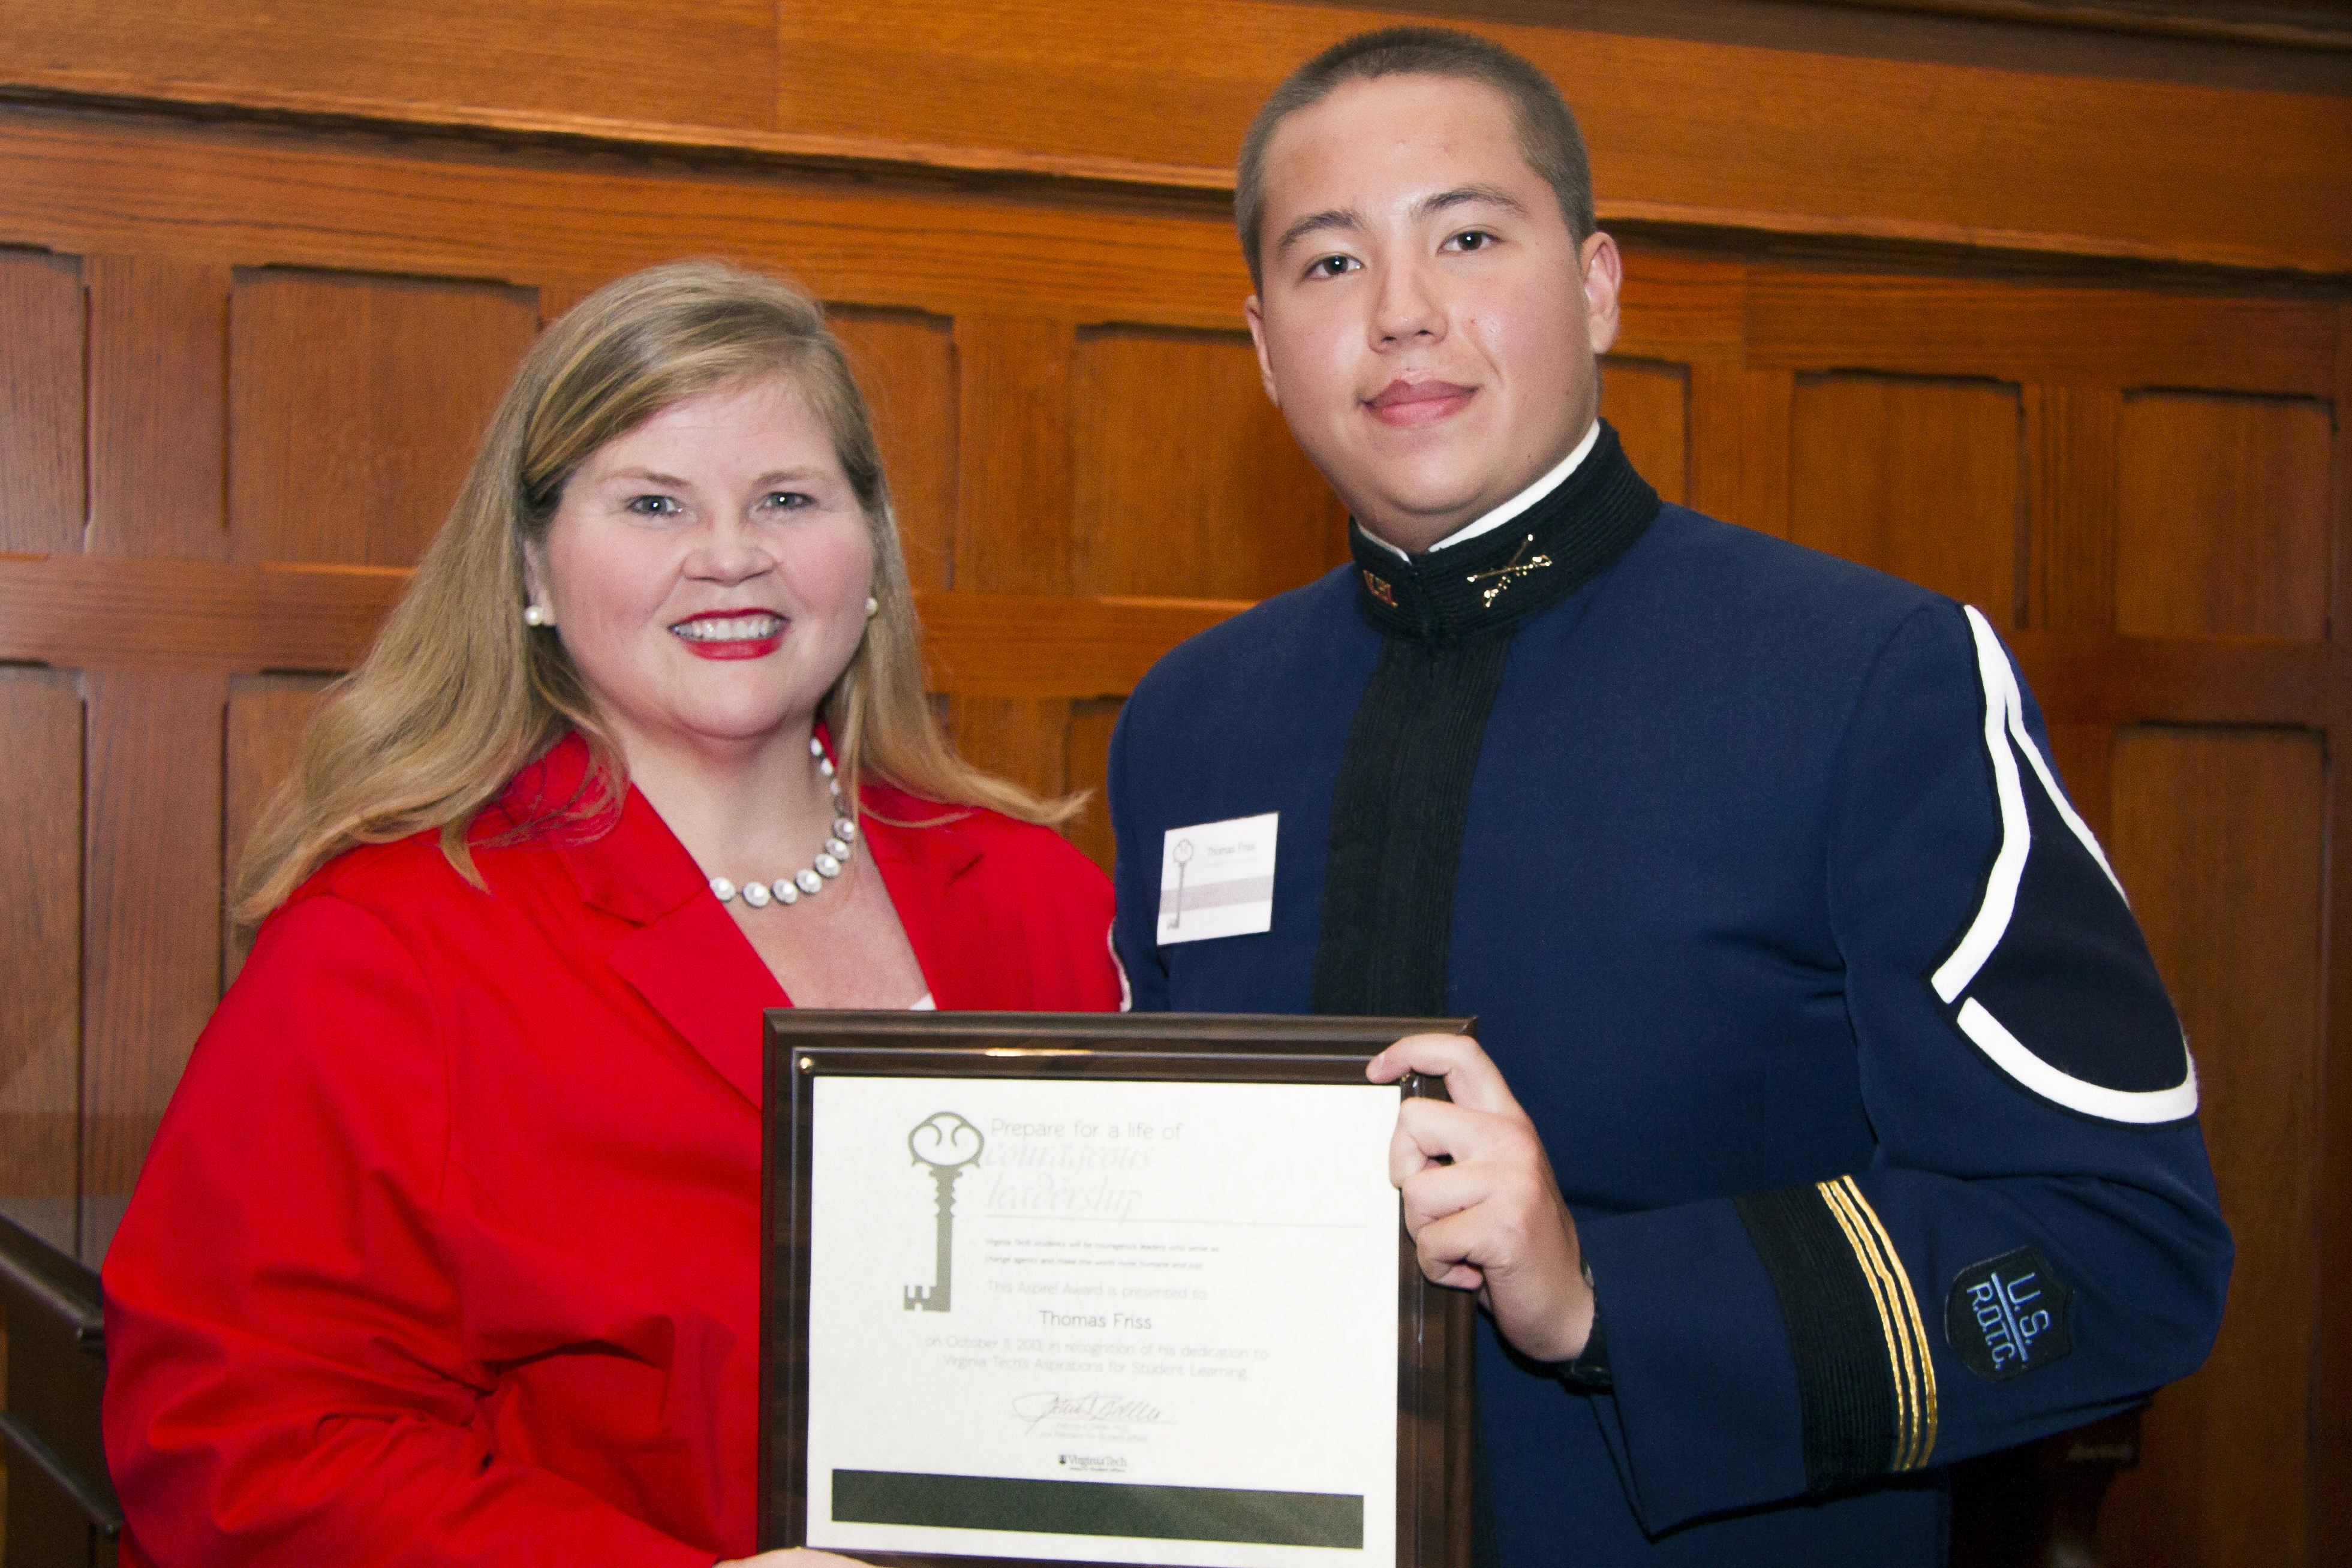 Patty Perillo presents award plaque to Cadet Thomas Friss